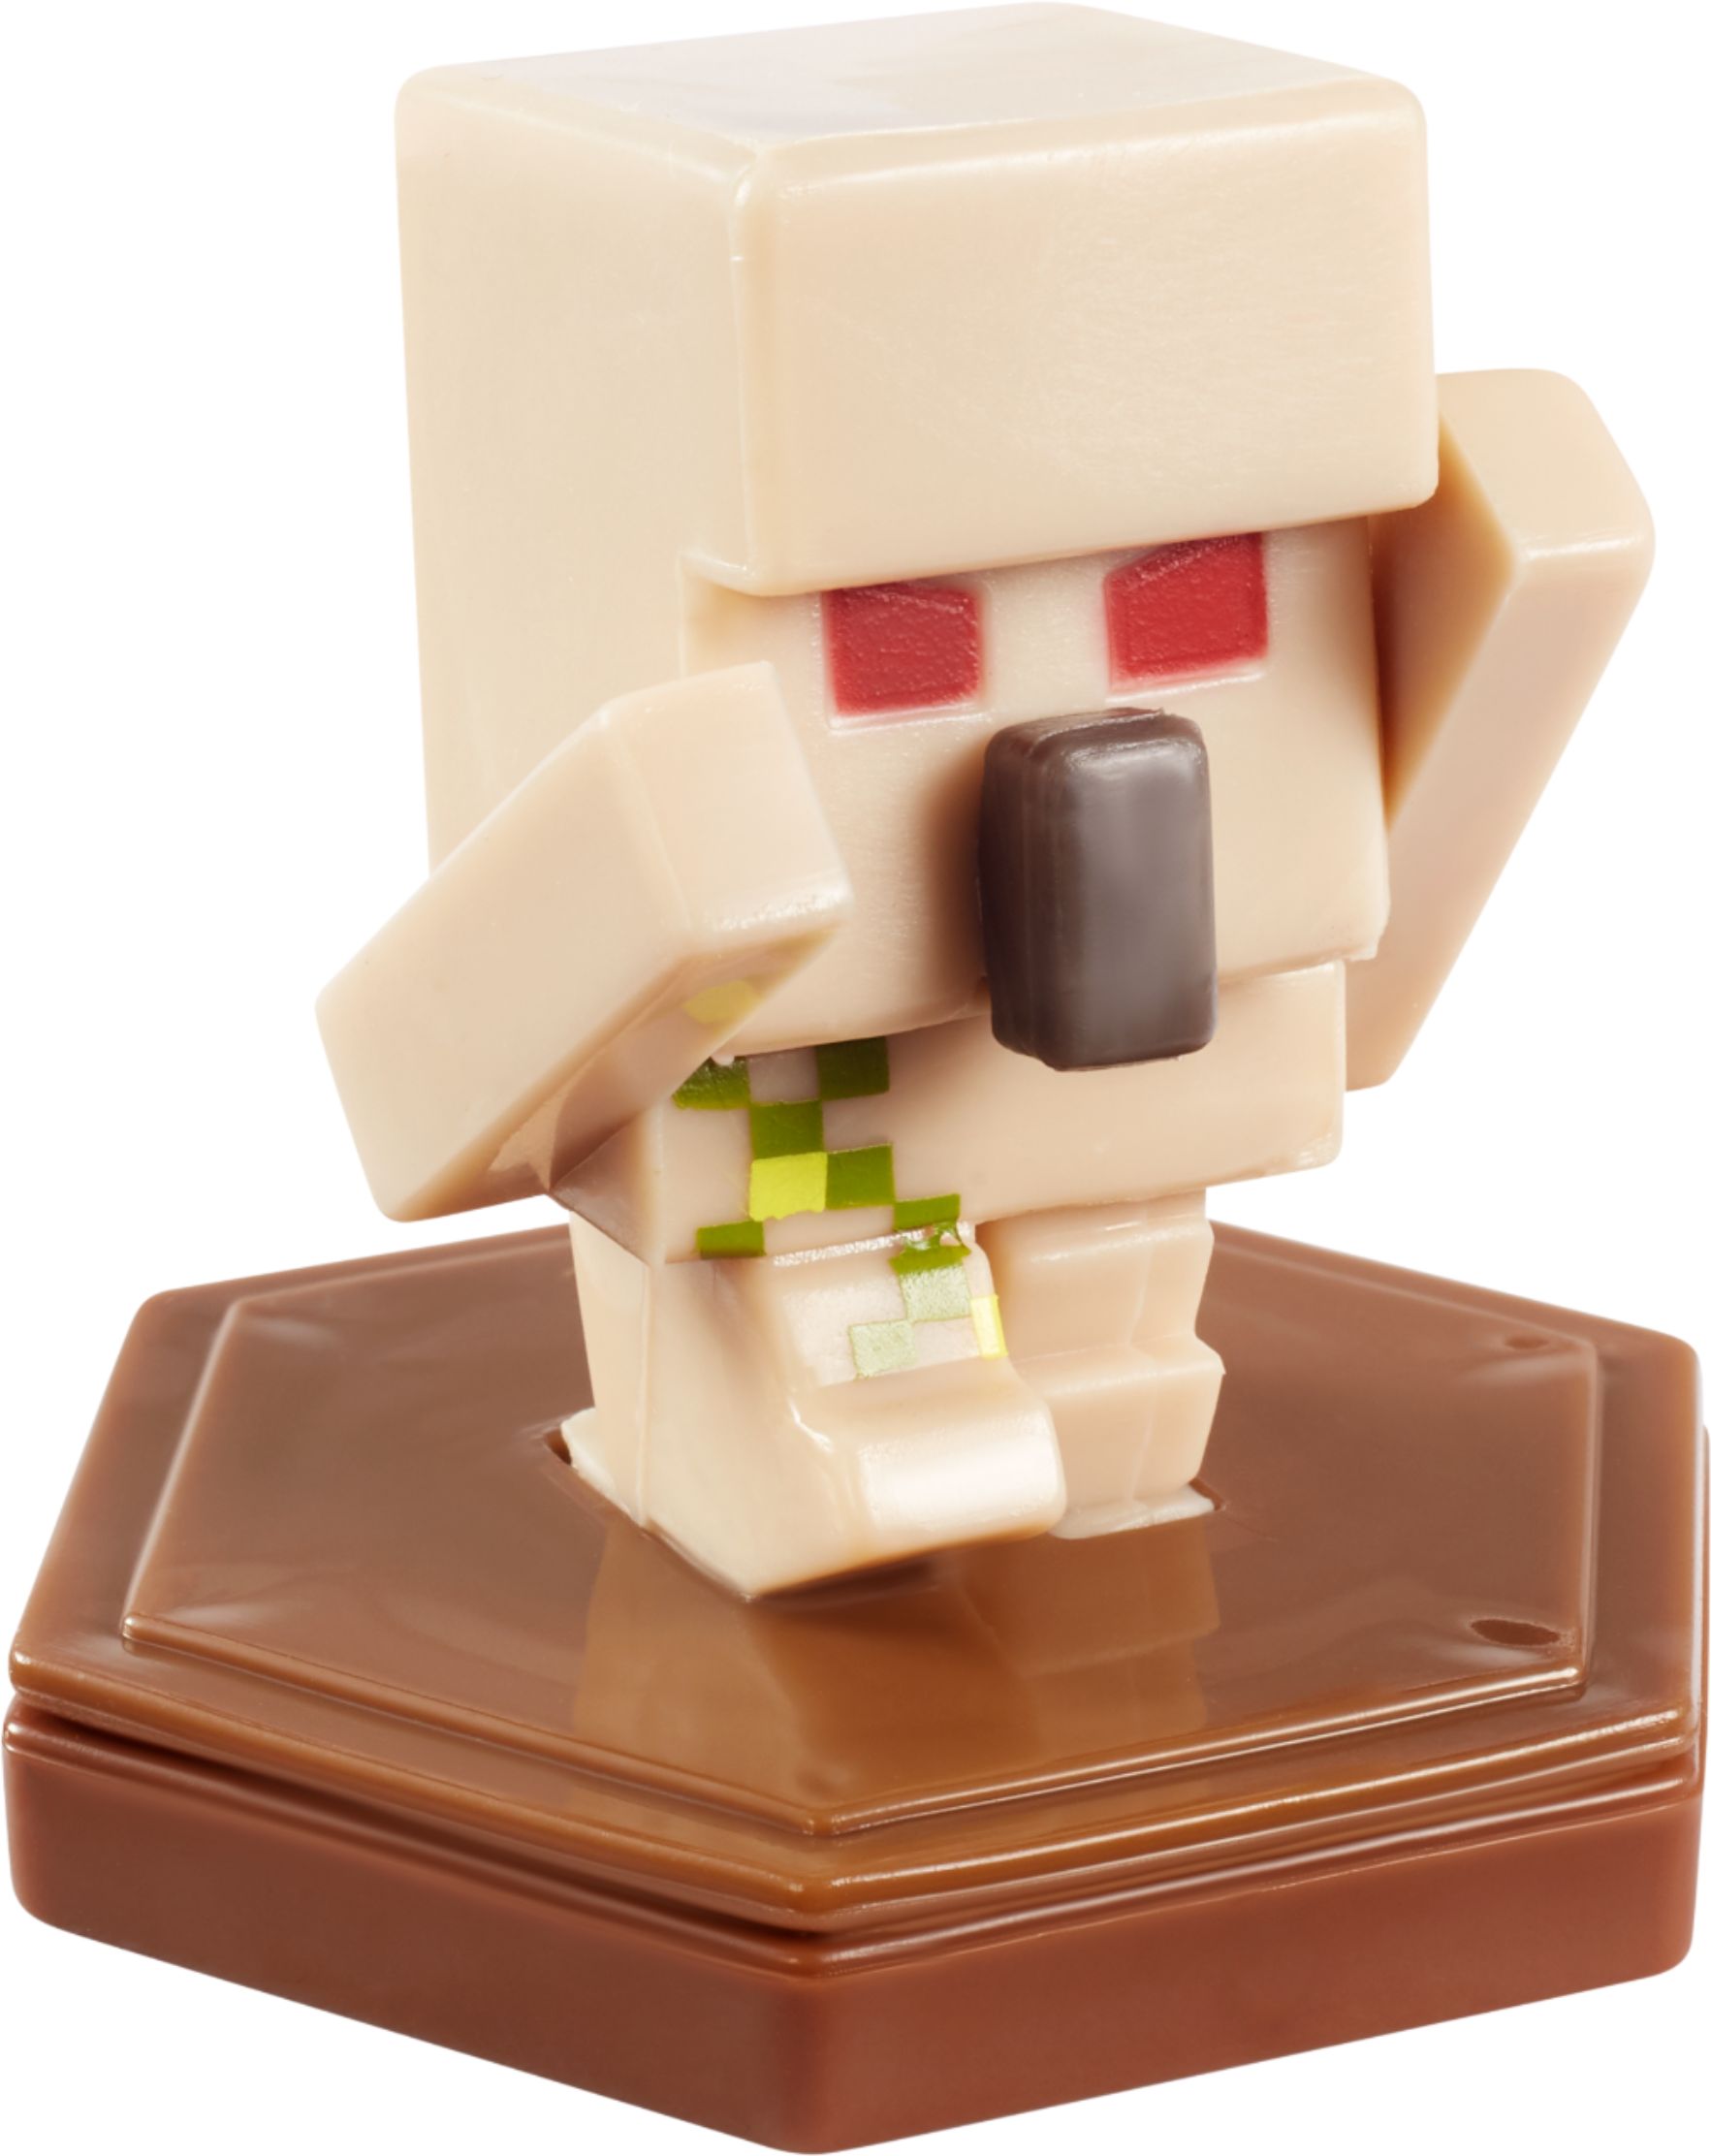 Best Buy: Mattel Minecraft Earth Boost Mini Figure Styles May Vary GKT32